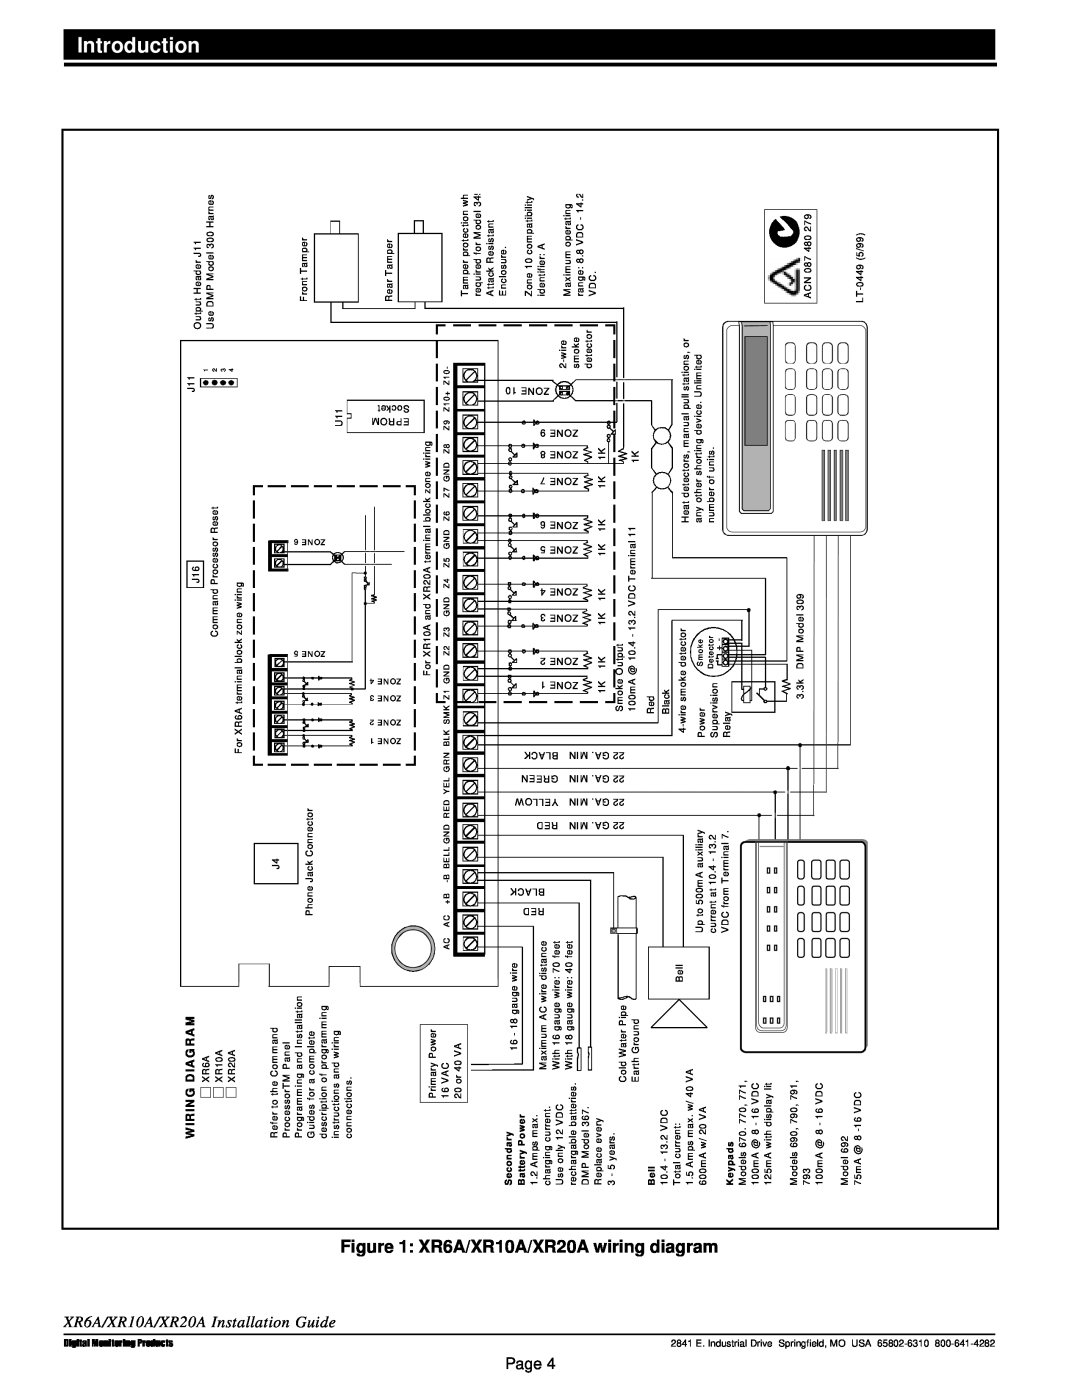 DMP Electronics XR6A/XR10A/XR20A wiring diagram, Introduction, XR6A/XR10A/XR20A Installation, Guide, S eco n d ary 